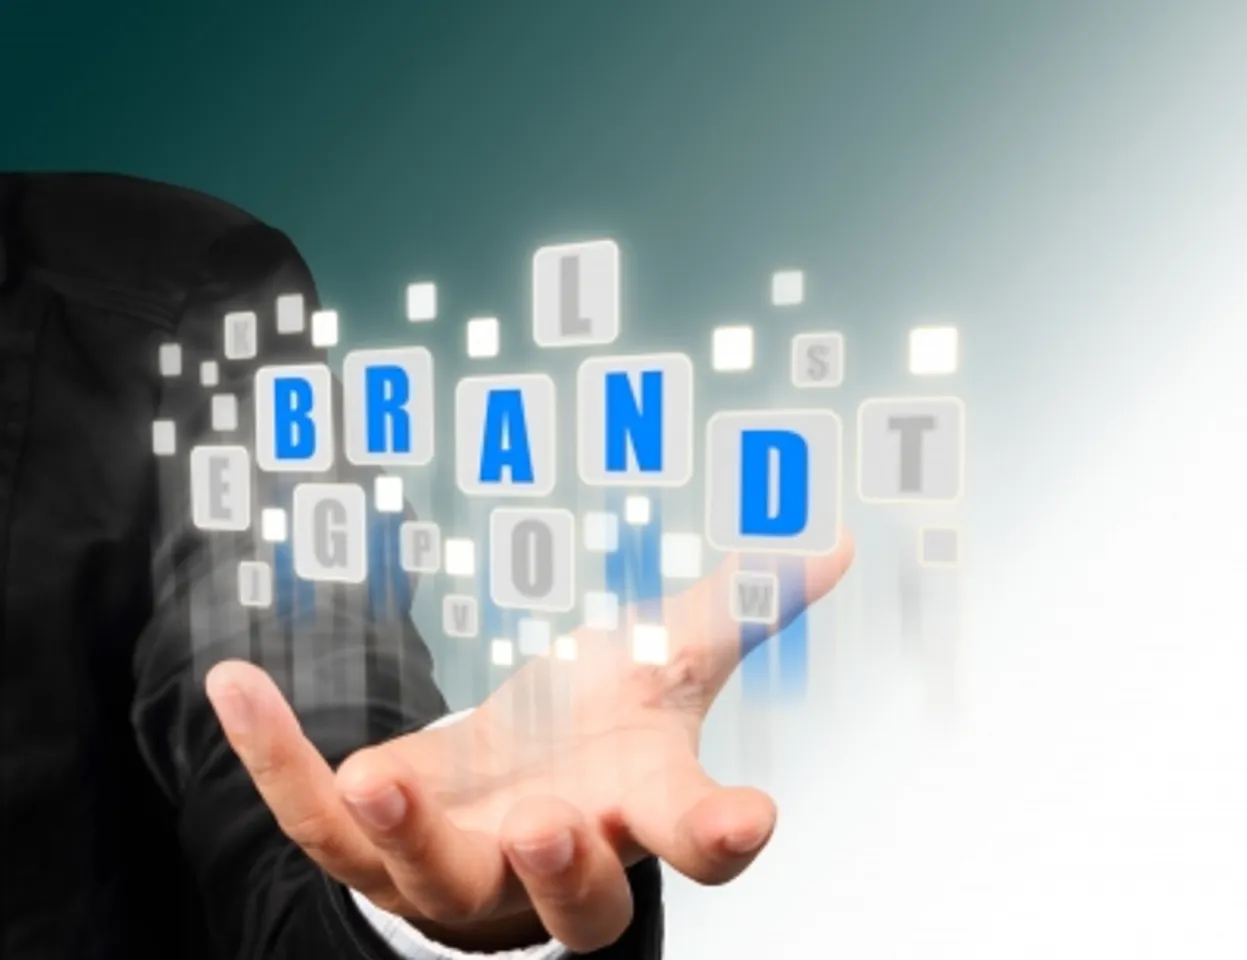 Building Social Brands Using Enterprise Grade Tools